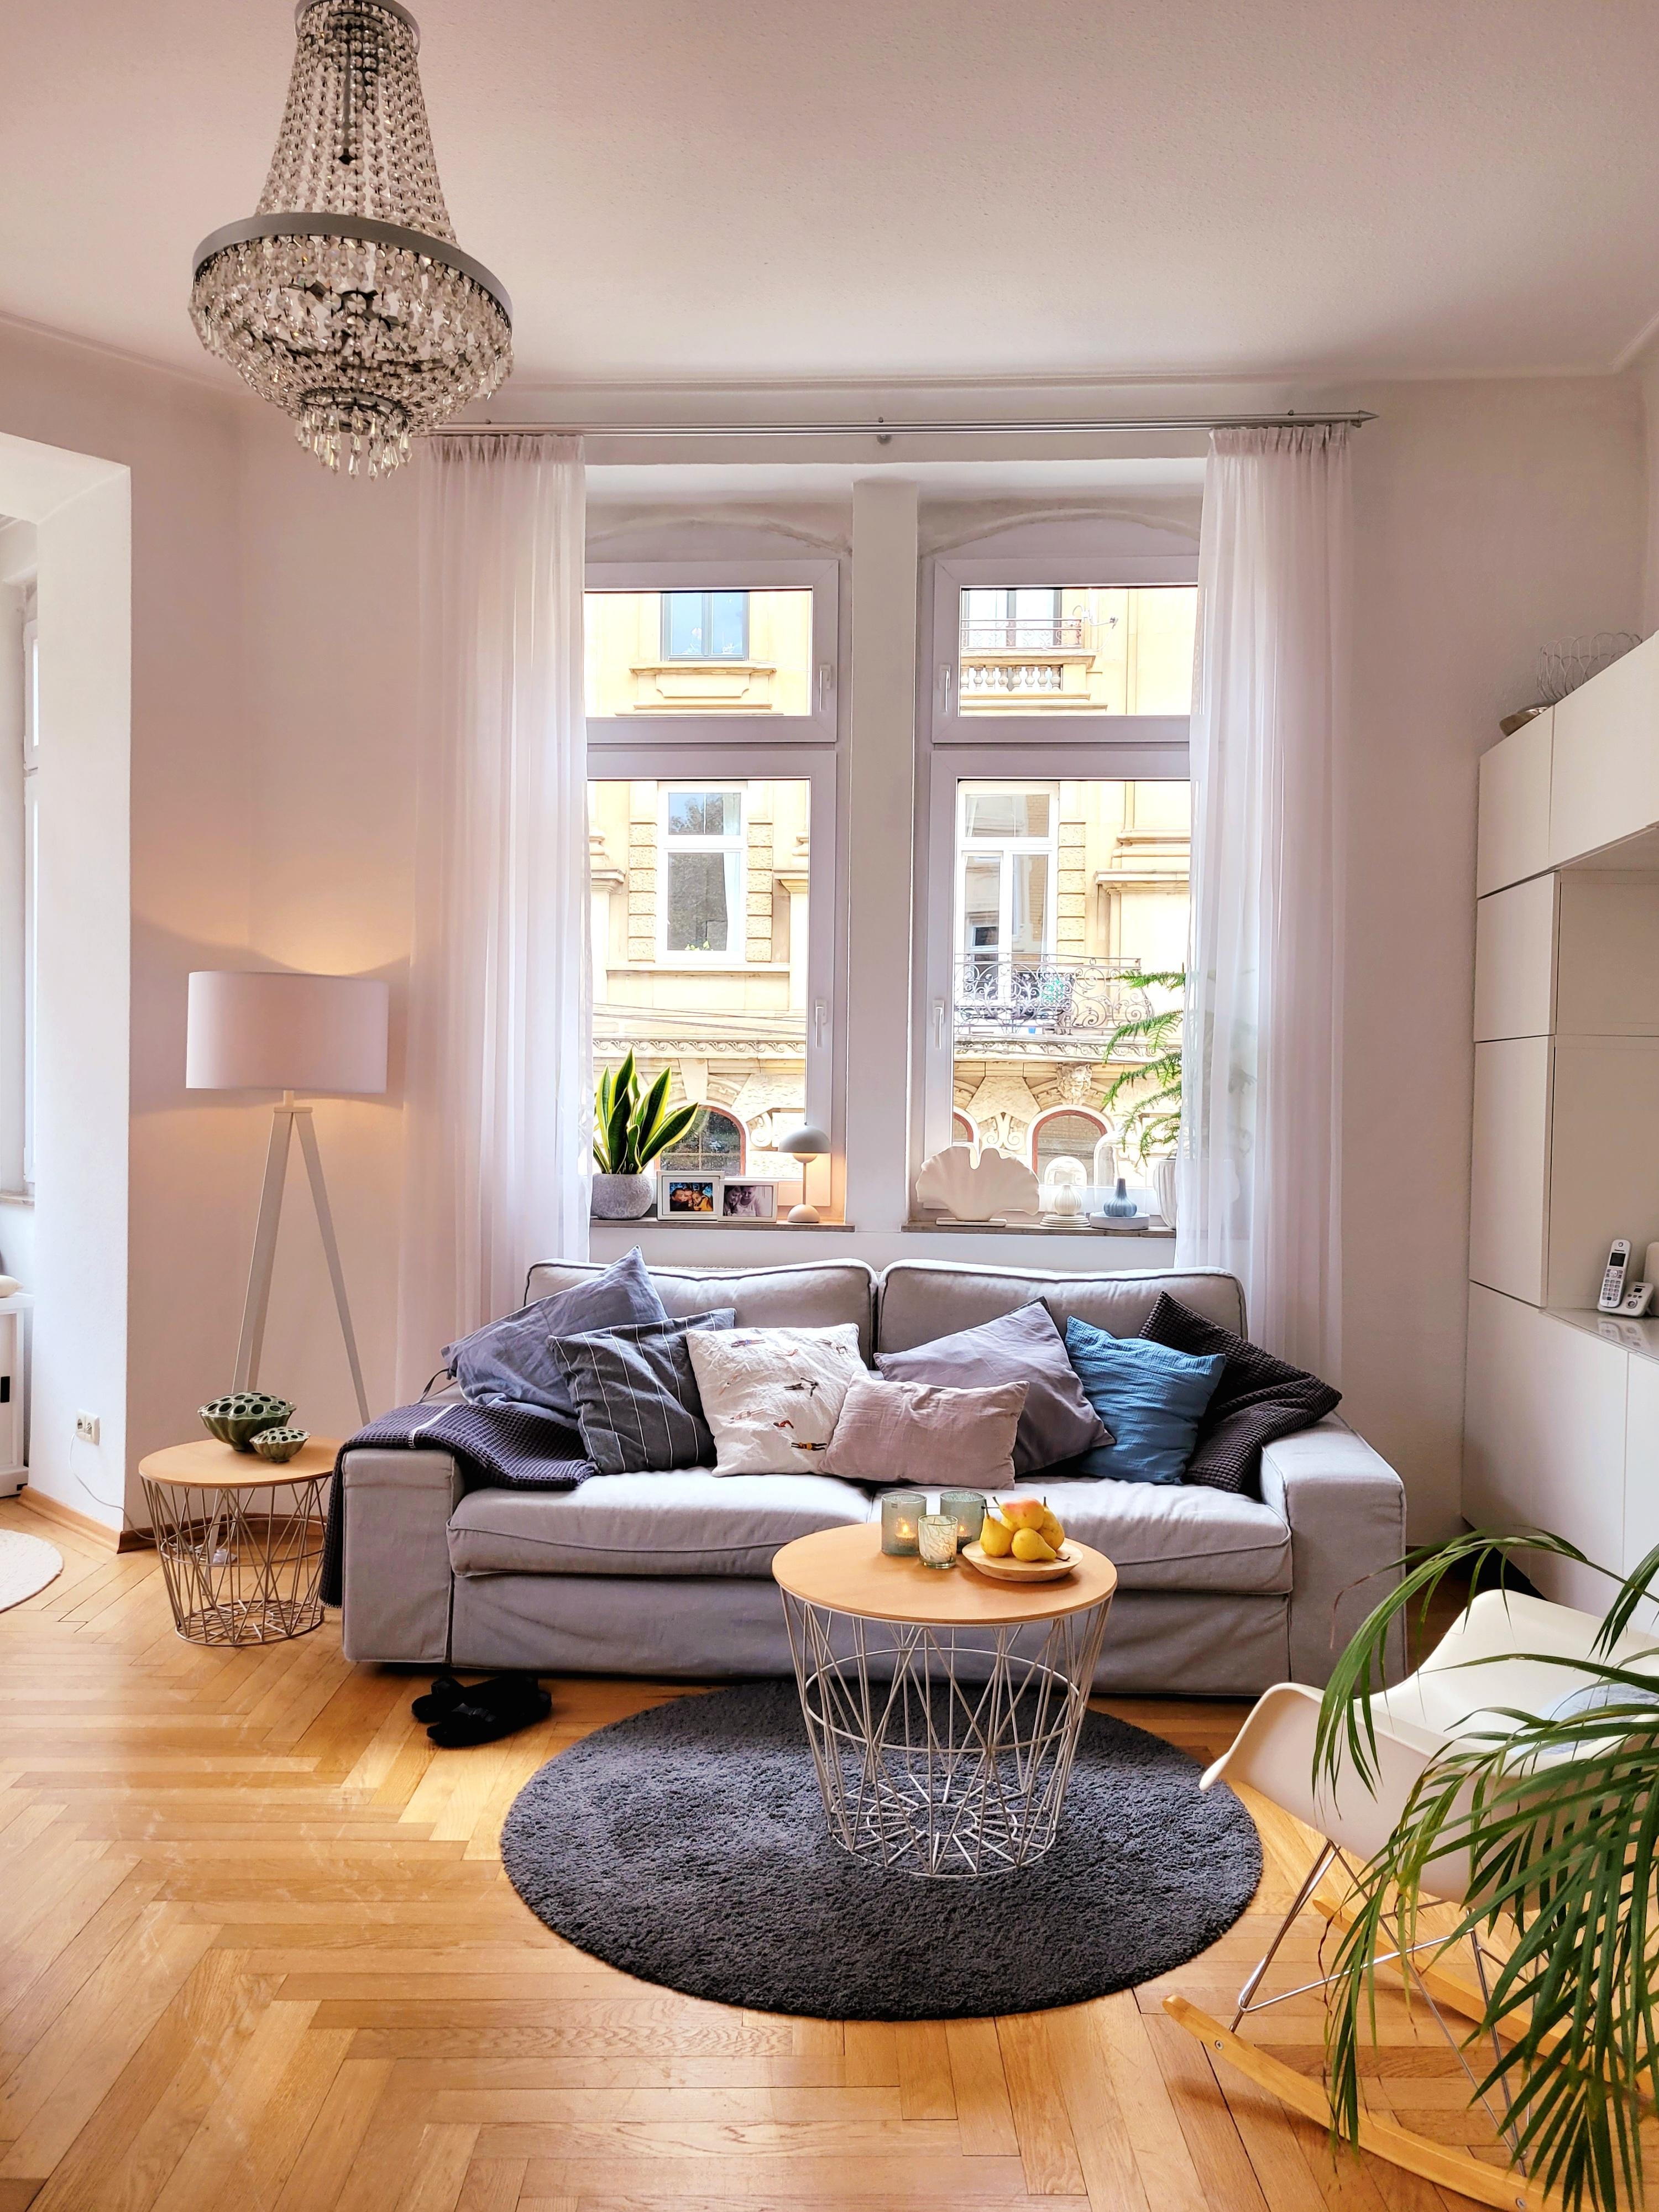 #Altbau #skandi #Wohnzimmer #Sofa #ikea #Design #vitra #ferm living #Sonntag #Lampen #Regal 